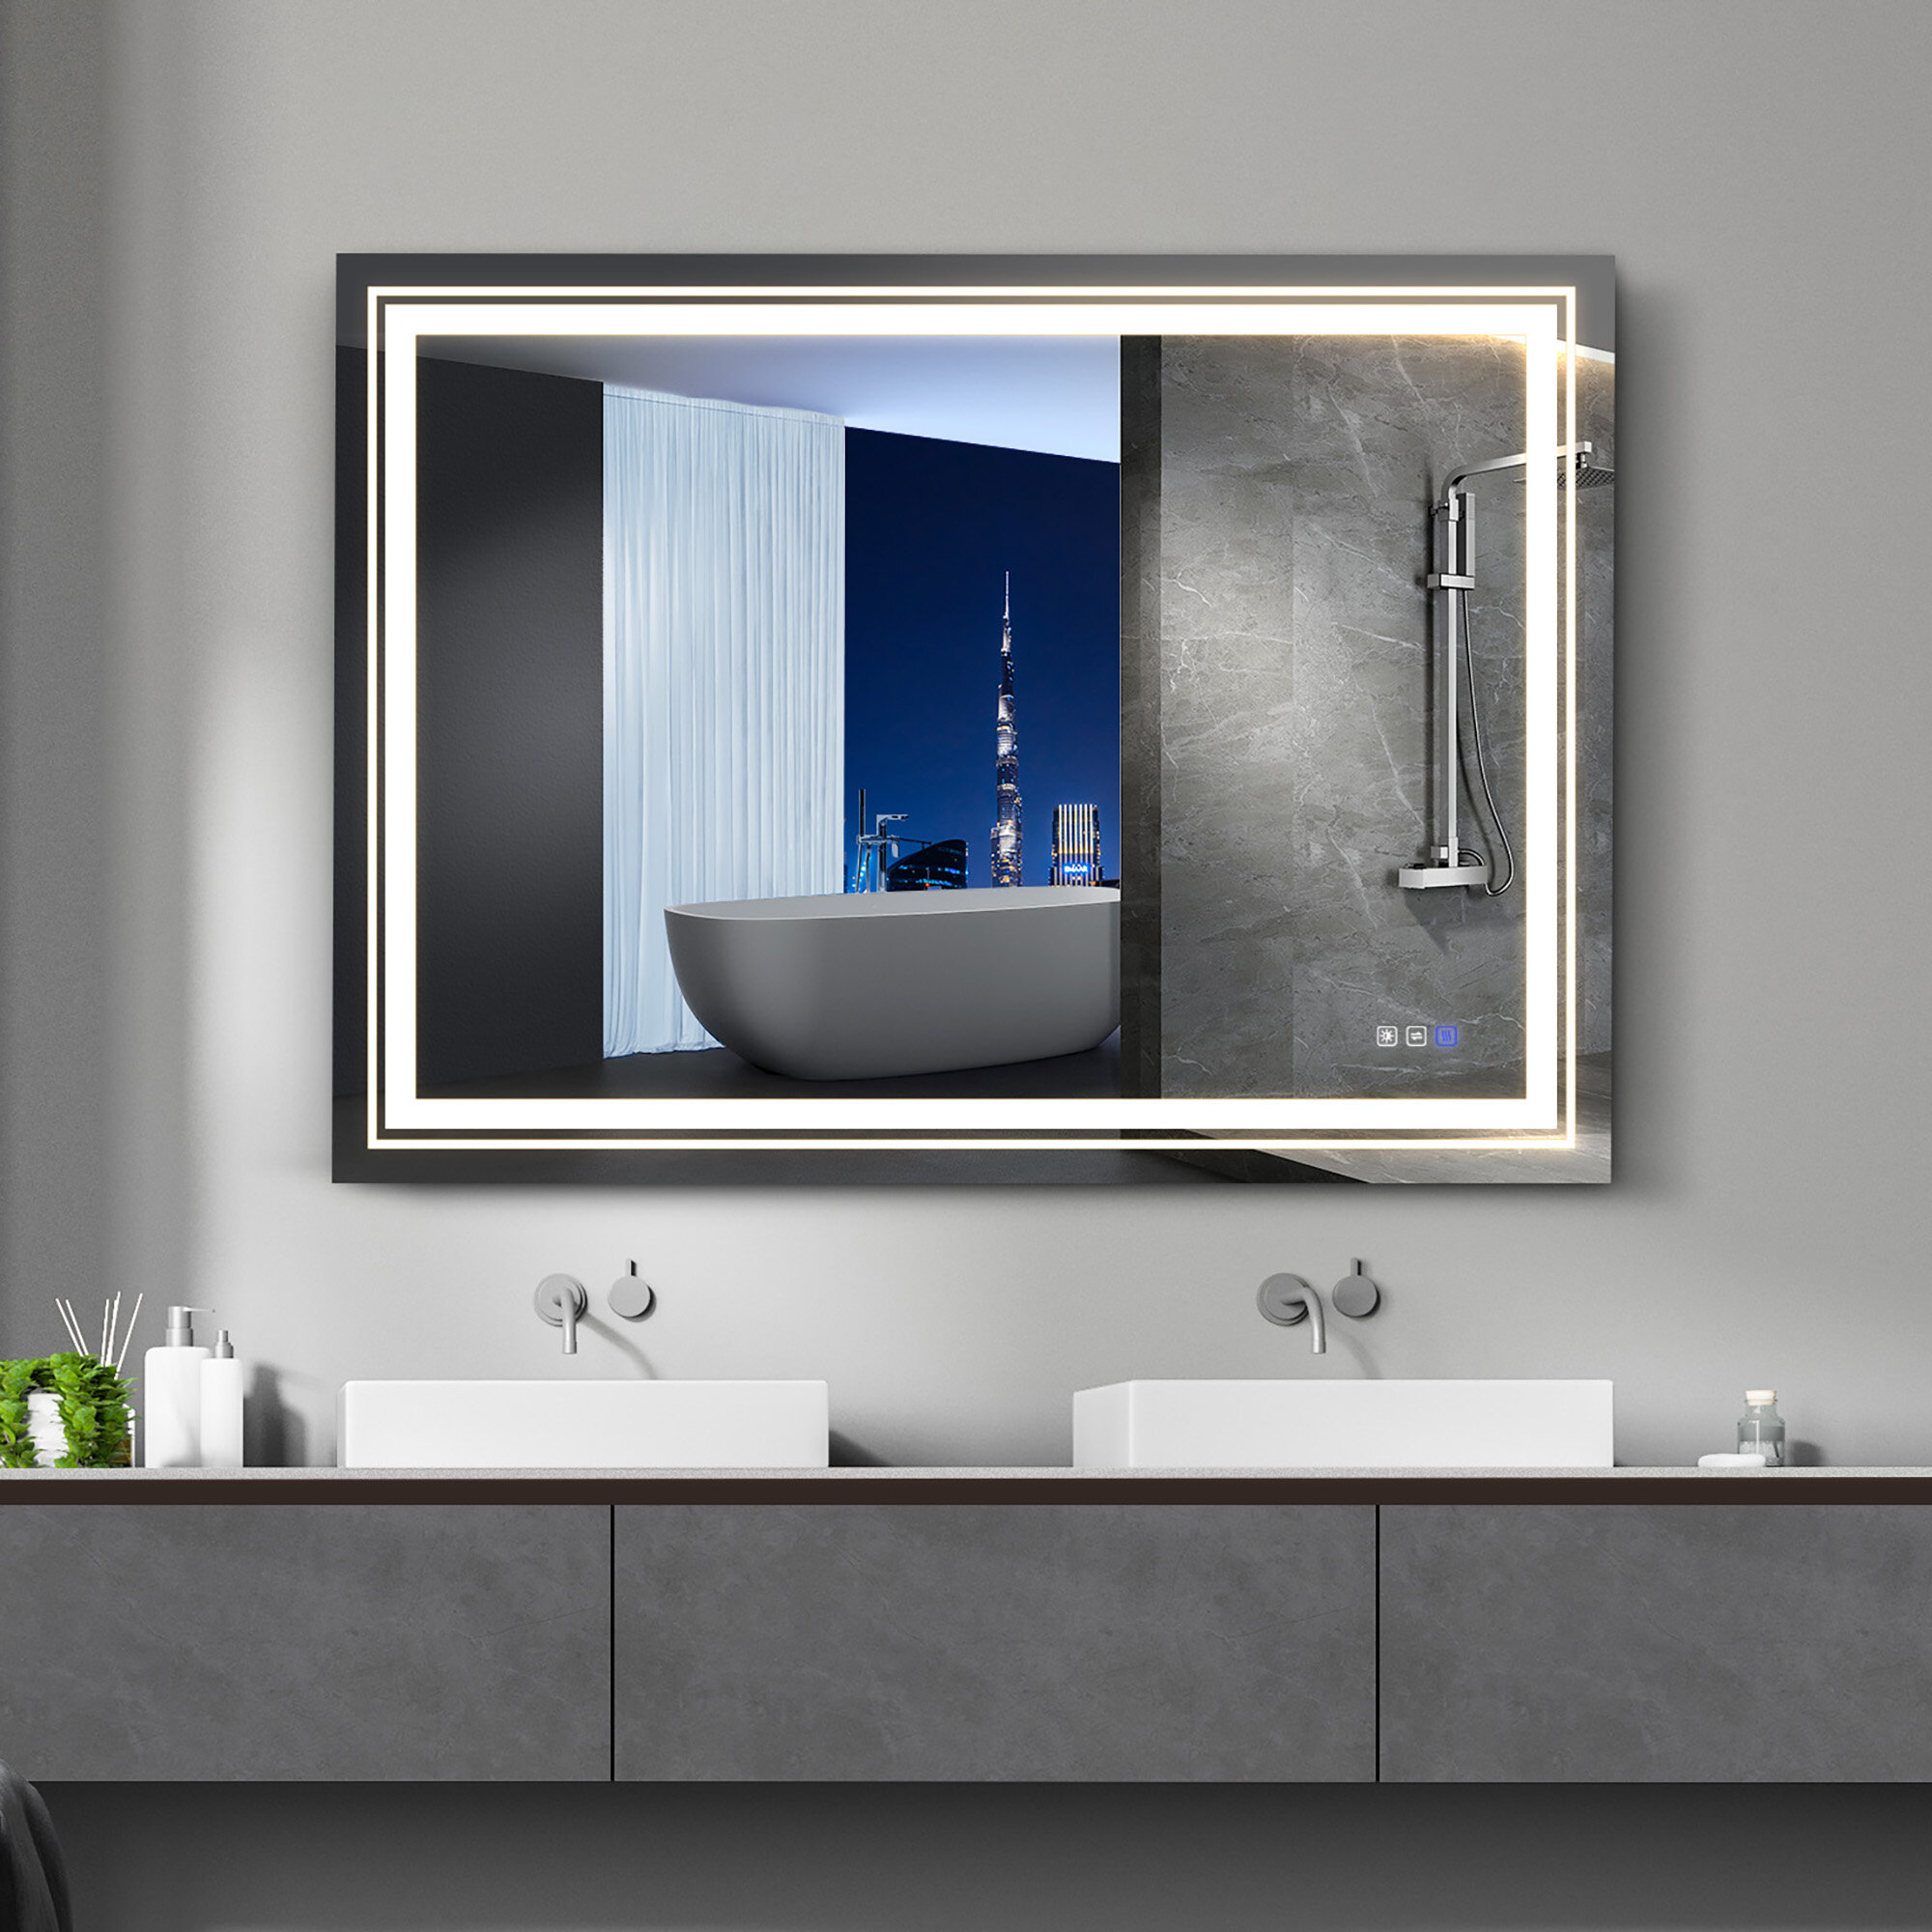 Silver Modern Bathroom Can Rotate Adjustable Wall Light Mirror LED Lighting 